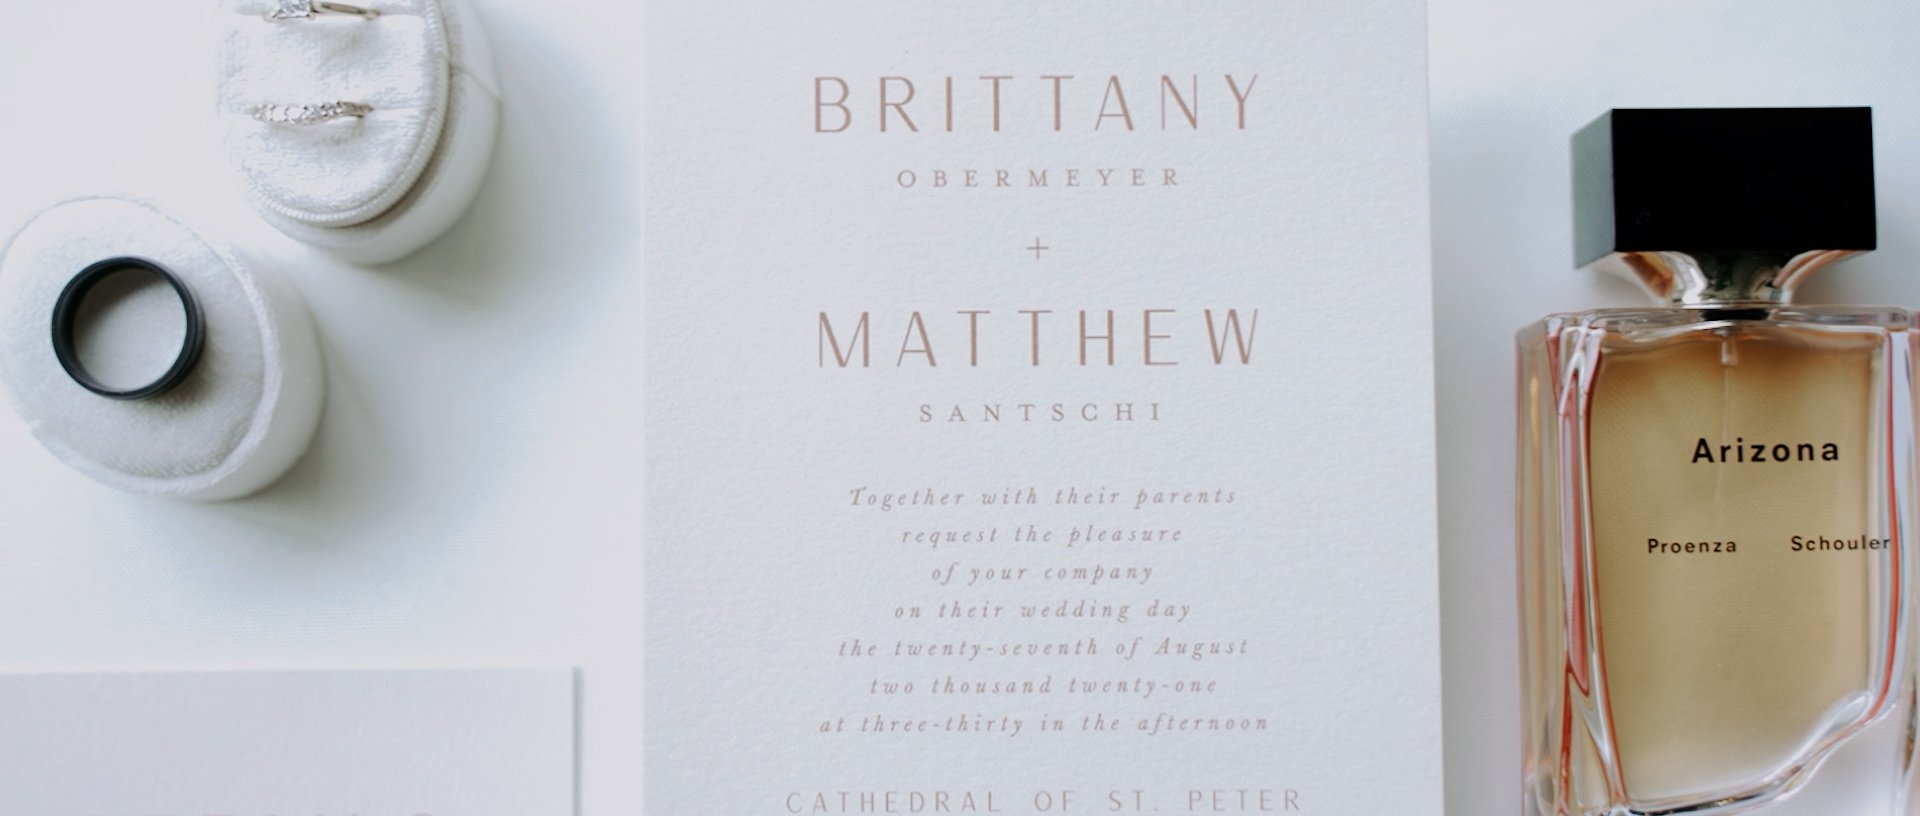 Brittany & Matthew.00_00_03_21.Still001.jpg